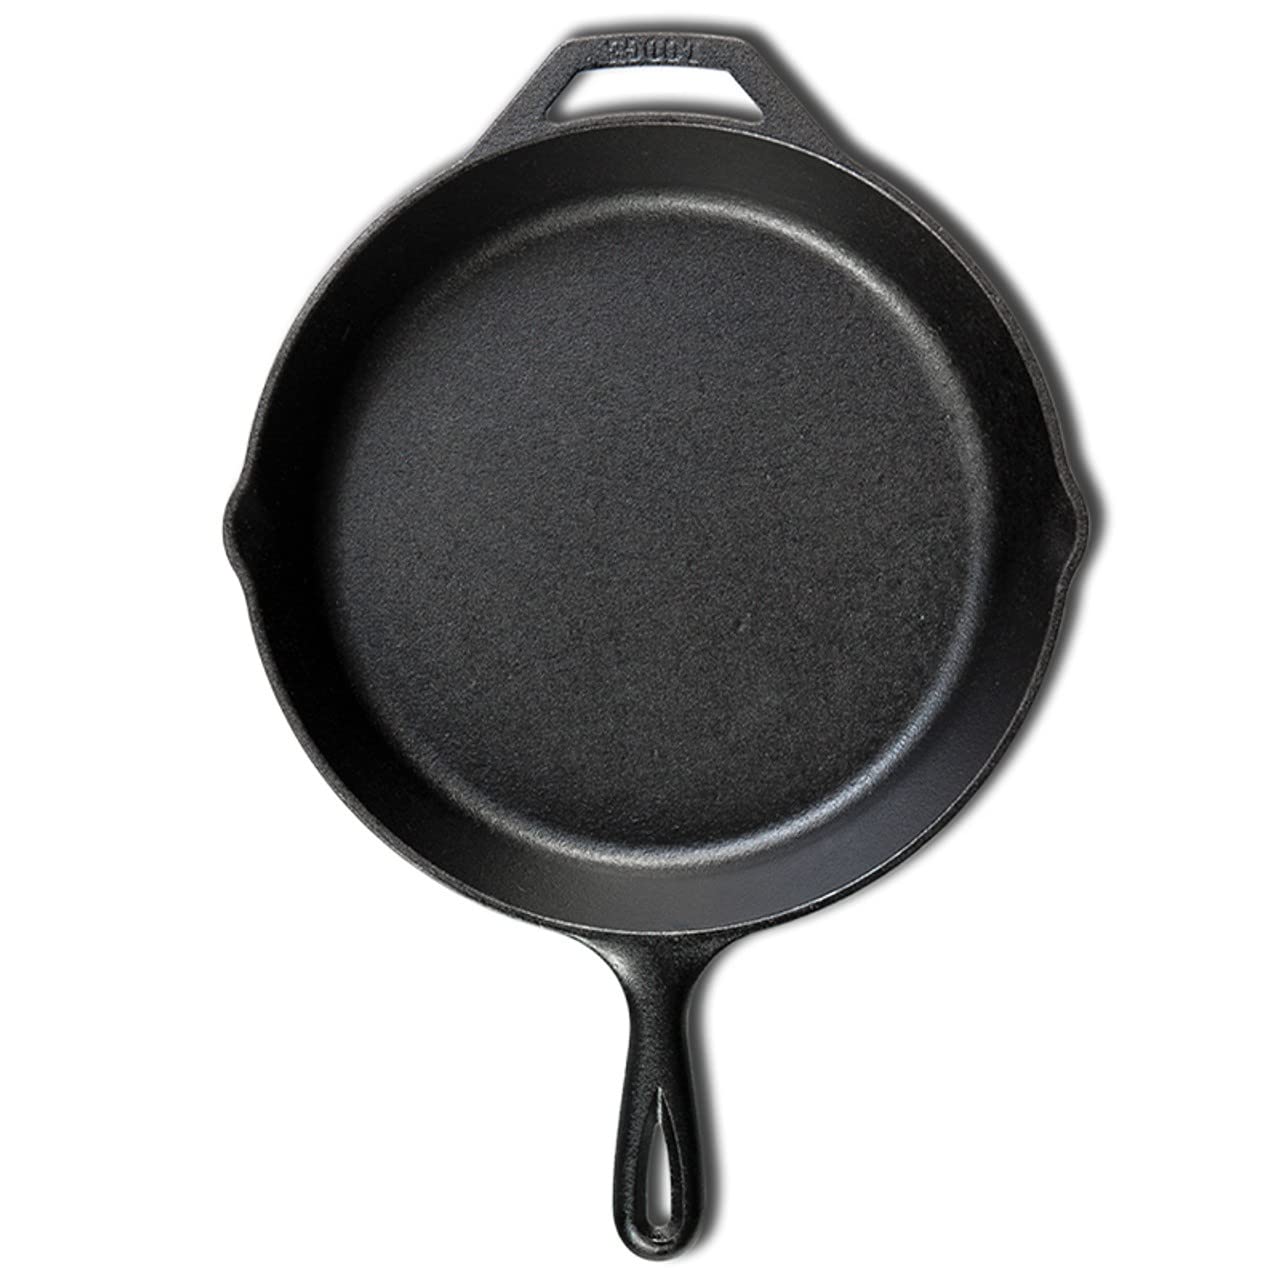 Lodge Seasoned Cast Iron Skillet - 12 Inch Ergonomic Frying Pan with Assist Handle, black